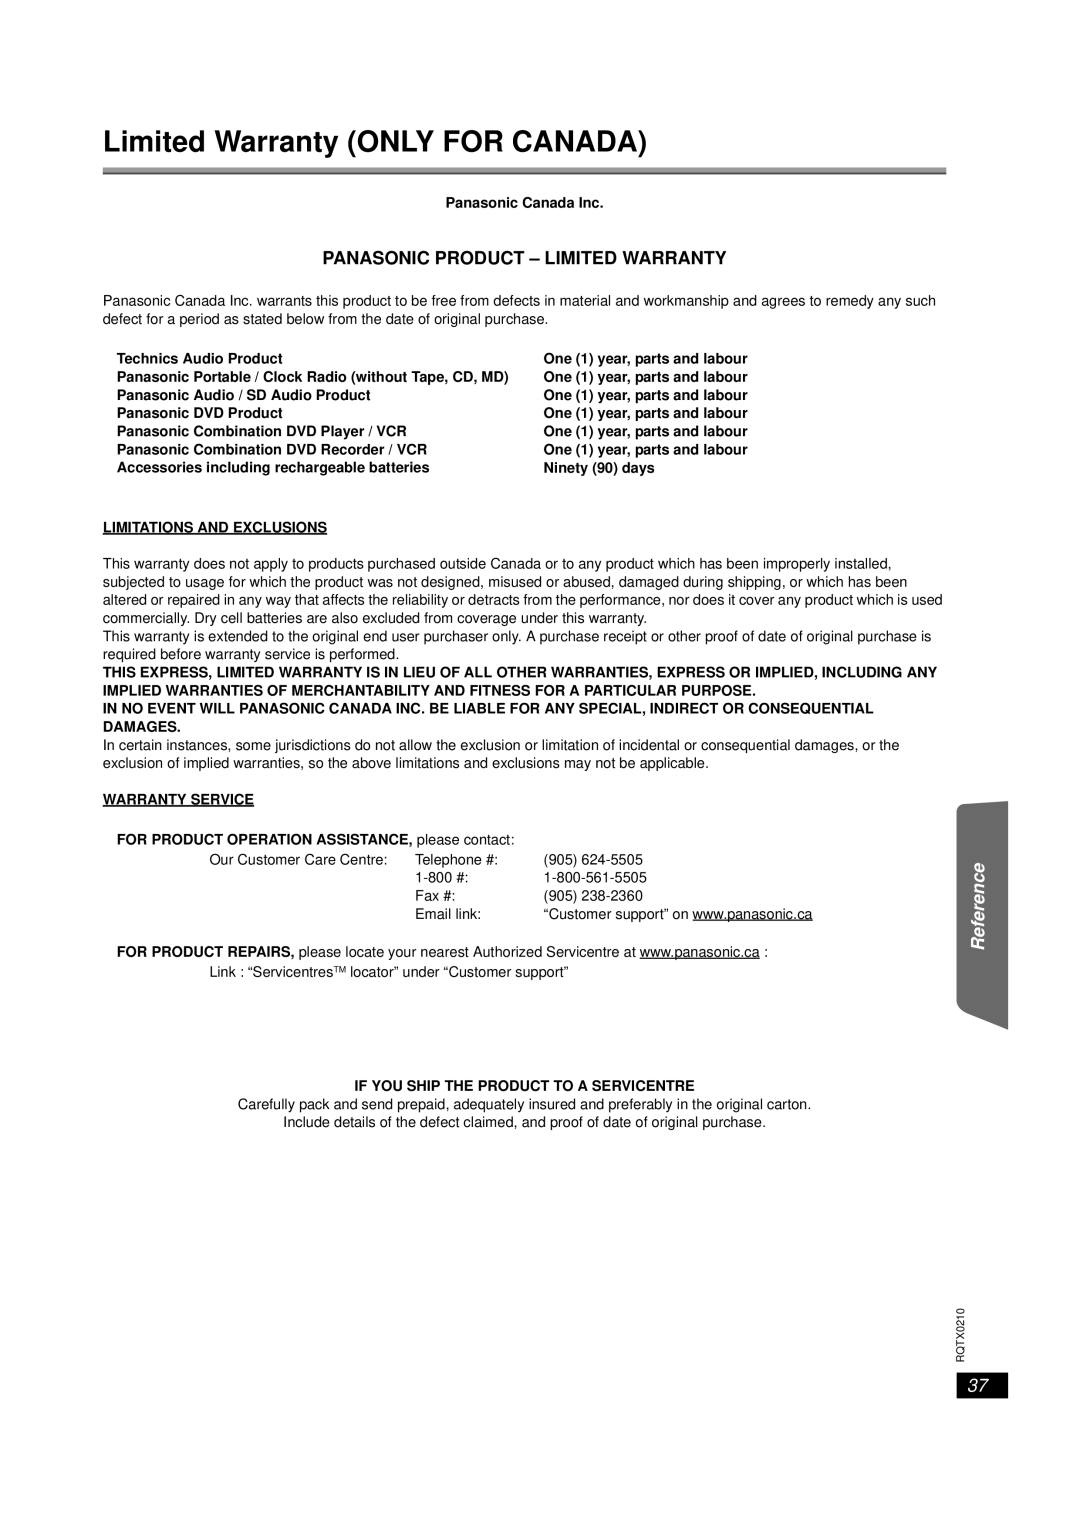 Panasonic SC-PT673, SC-PT670 manual Limited Warranty ONLY FOR CANADA, Panasonic Product - Limited Warranty, Reference 